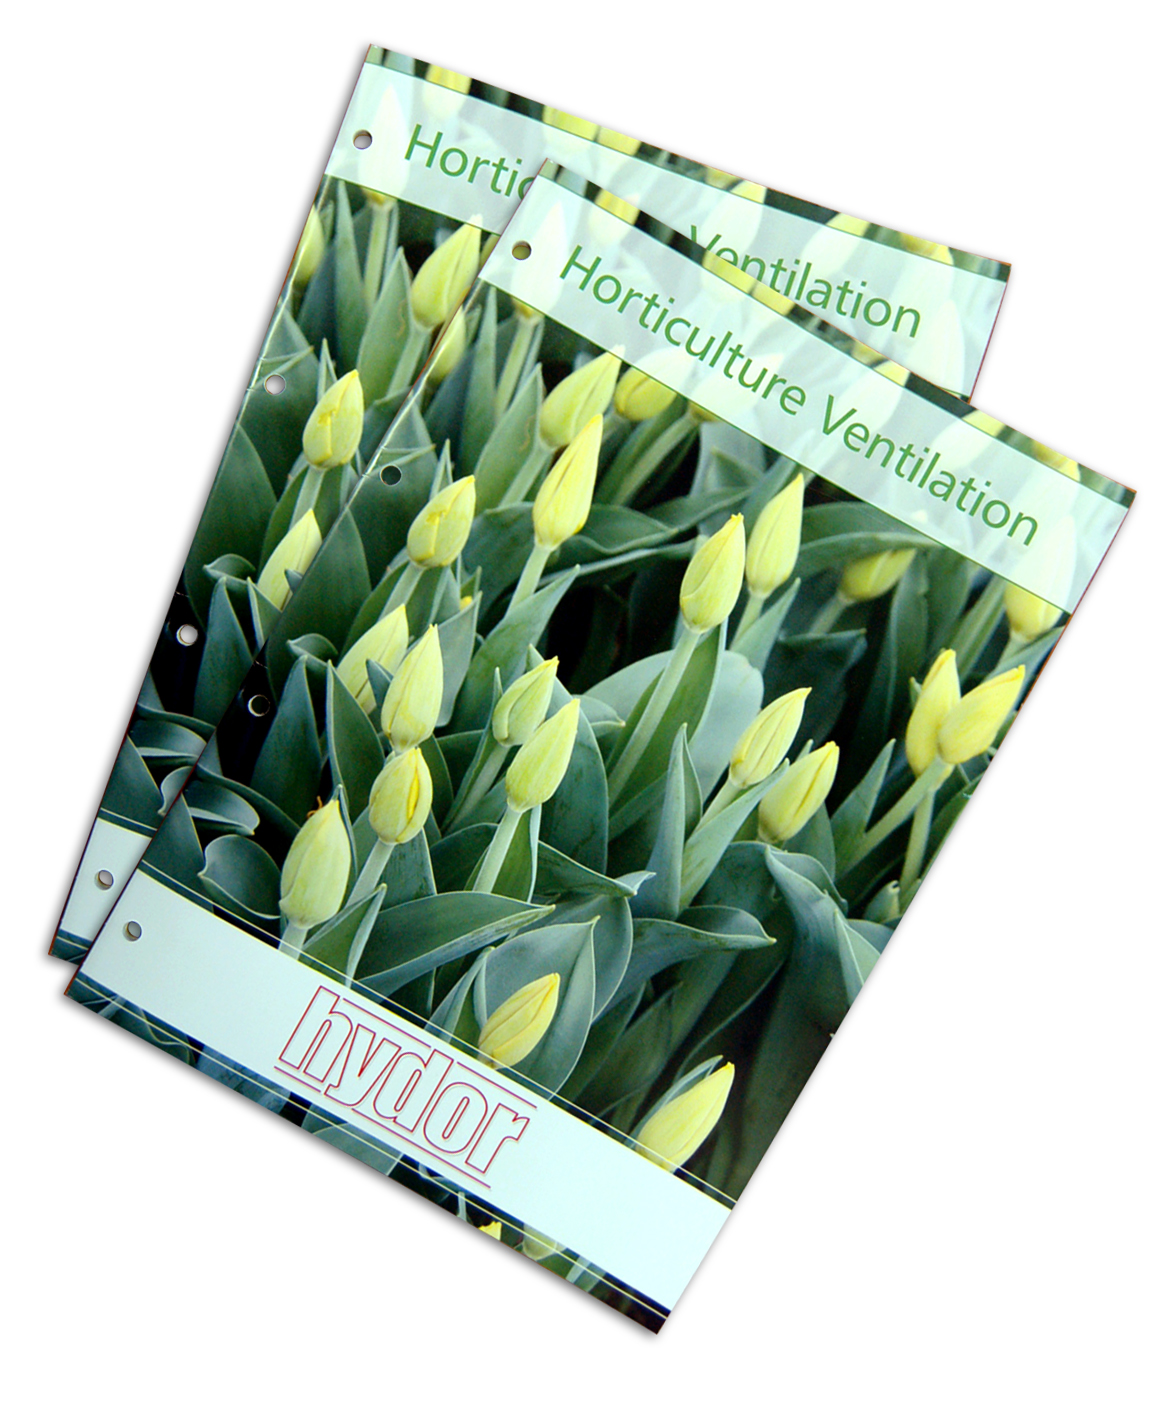 Hydor's horticulture brochure